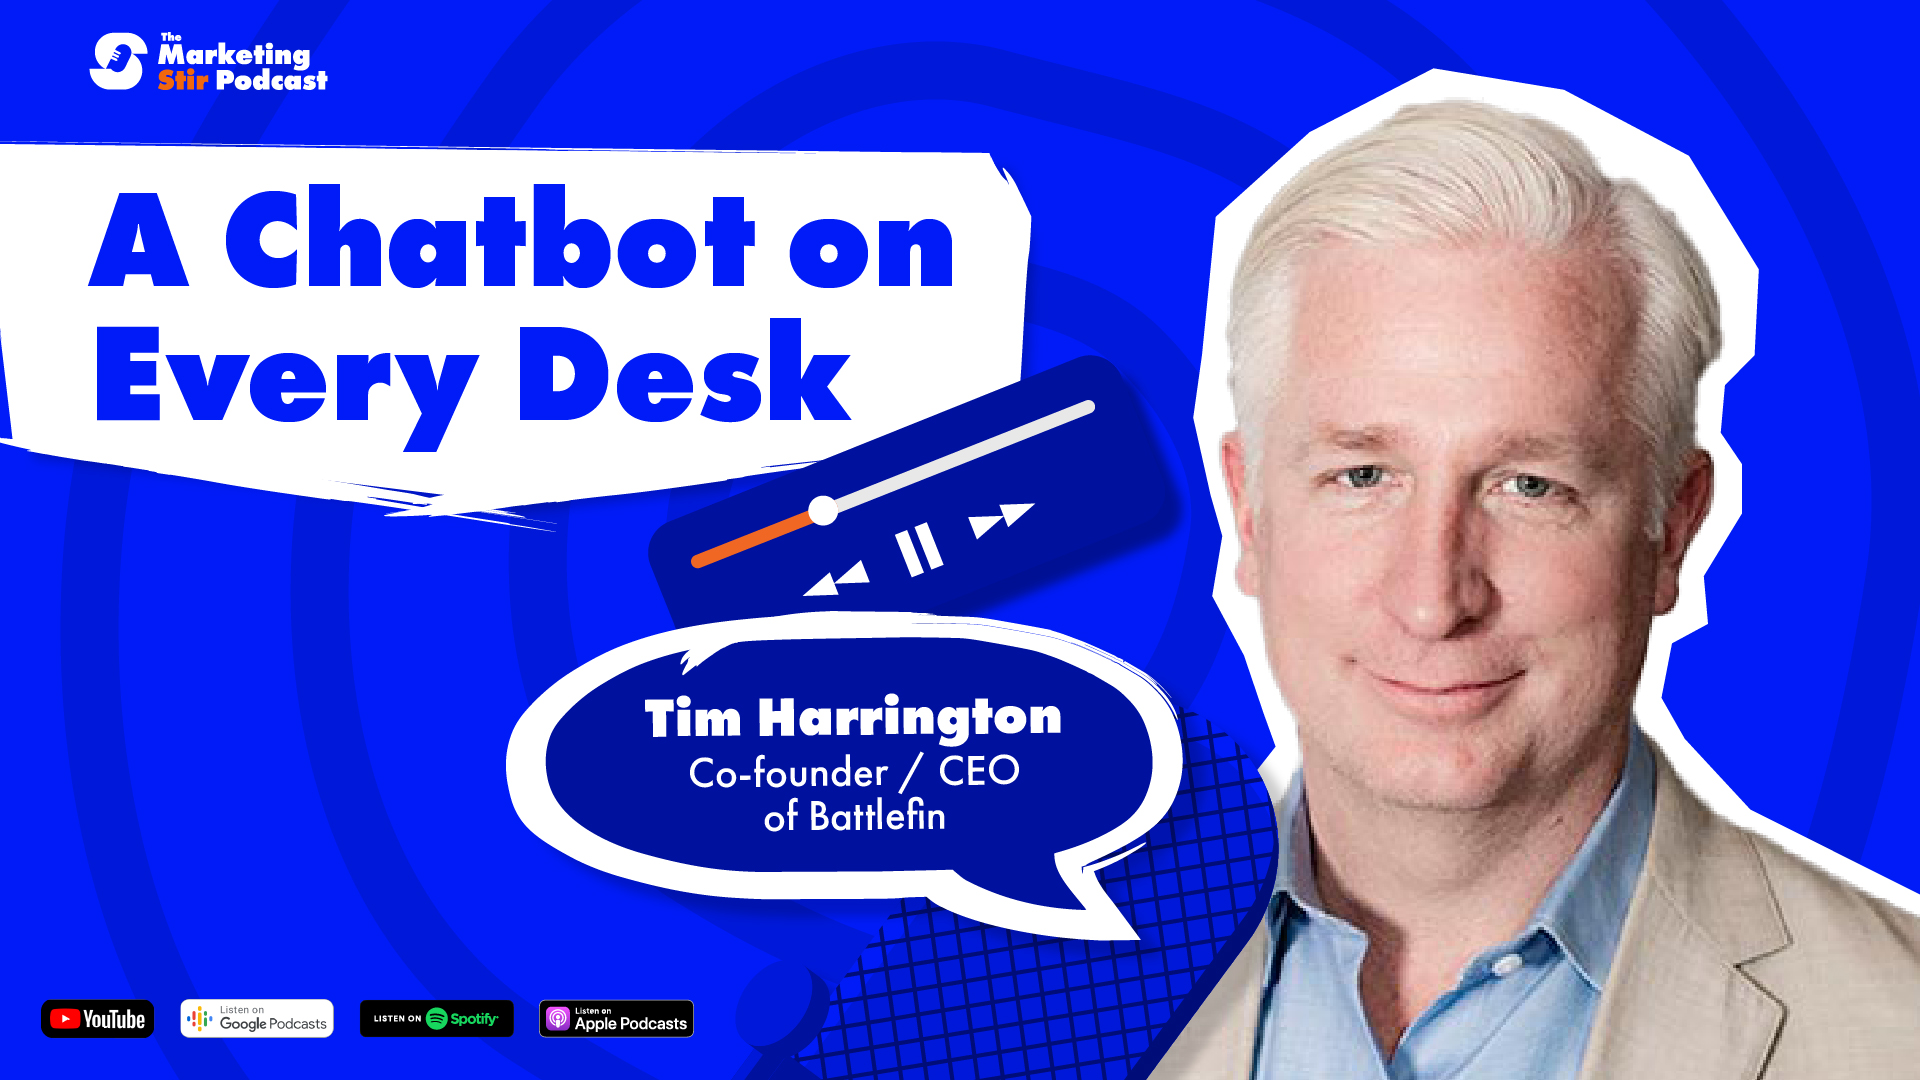 Tim Harrington (BattleFin) - A Chatbot on Every Desk